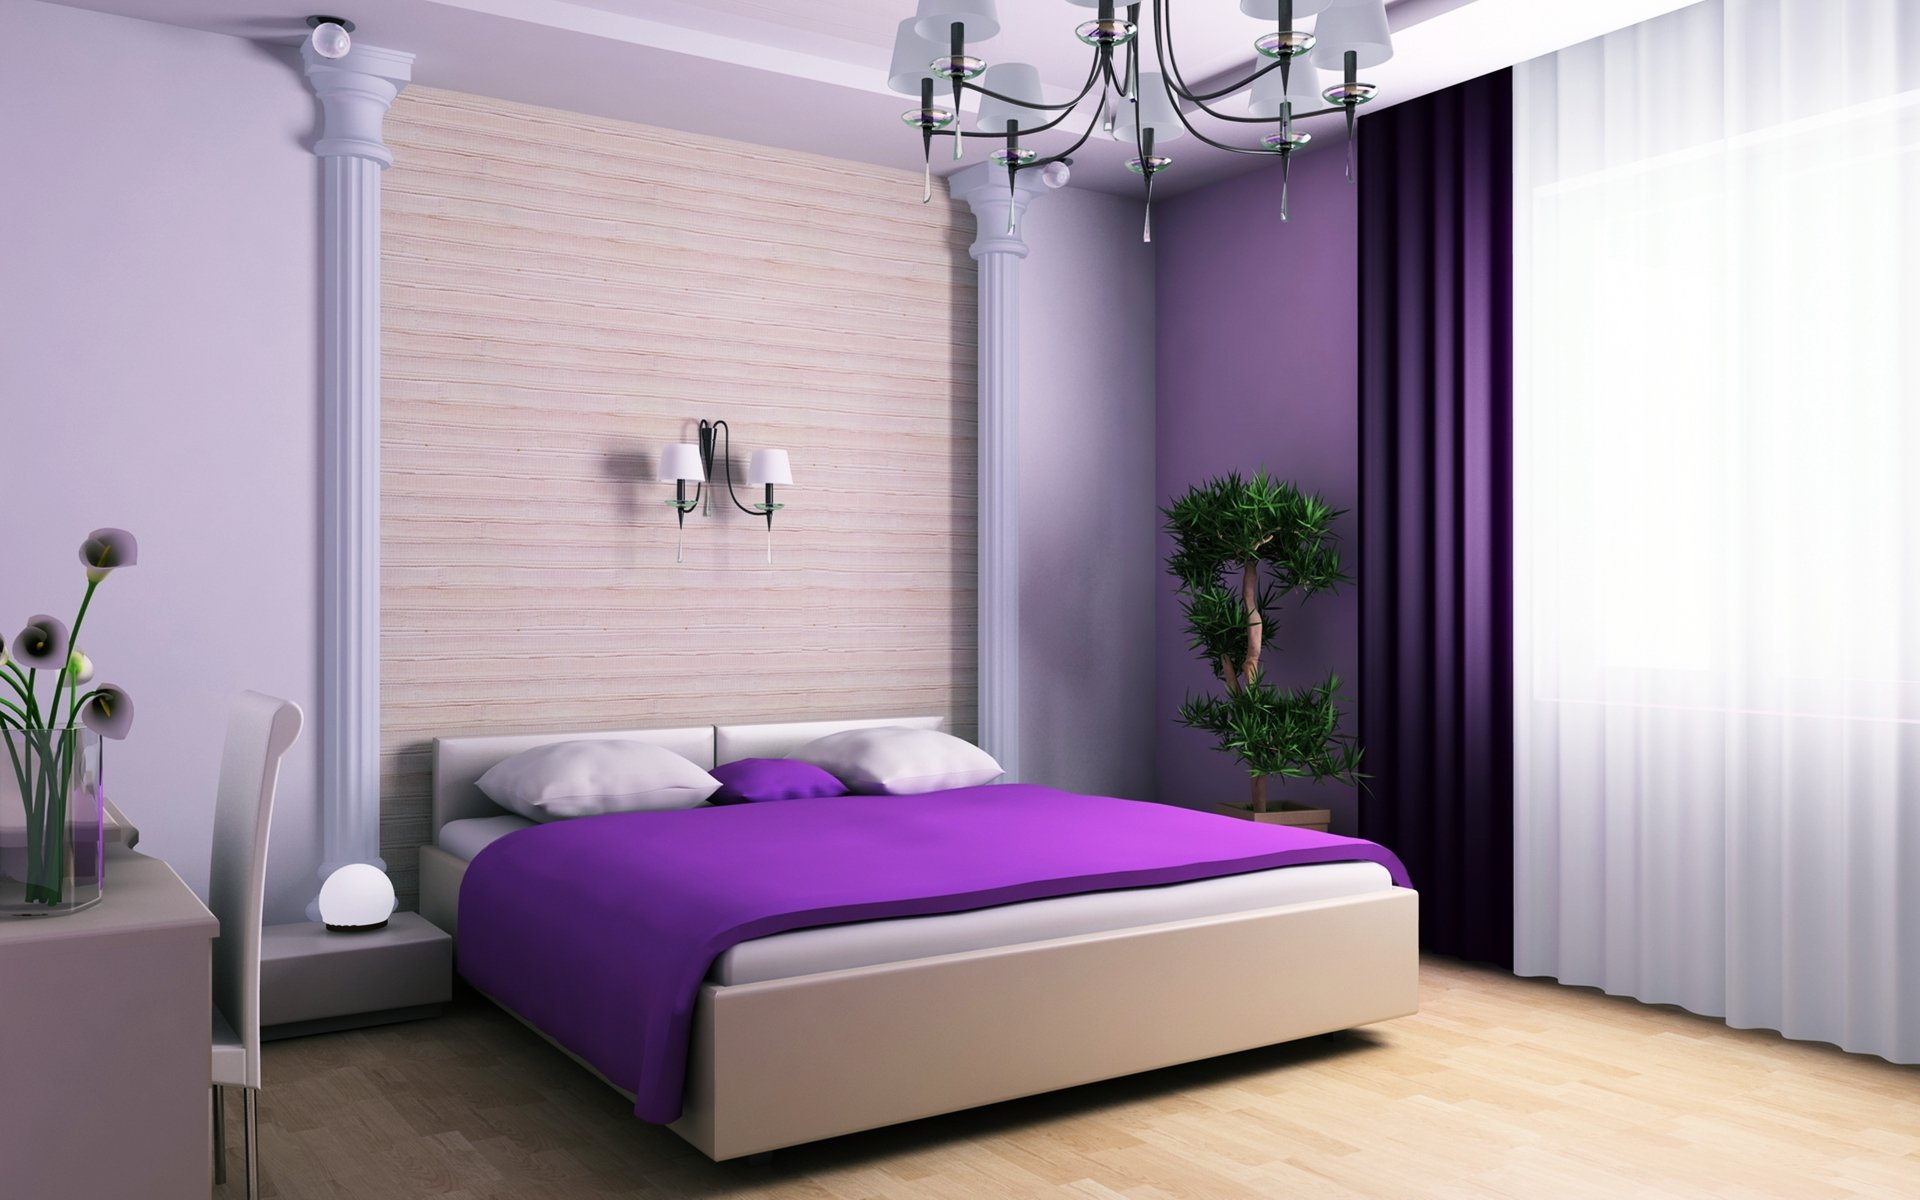 Bedroom 4k Ultra HD Wallpaper | Background Image ...